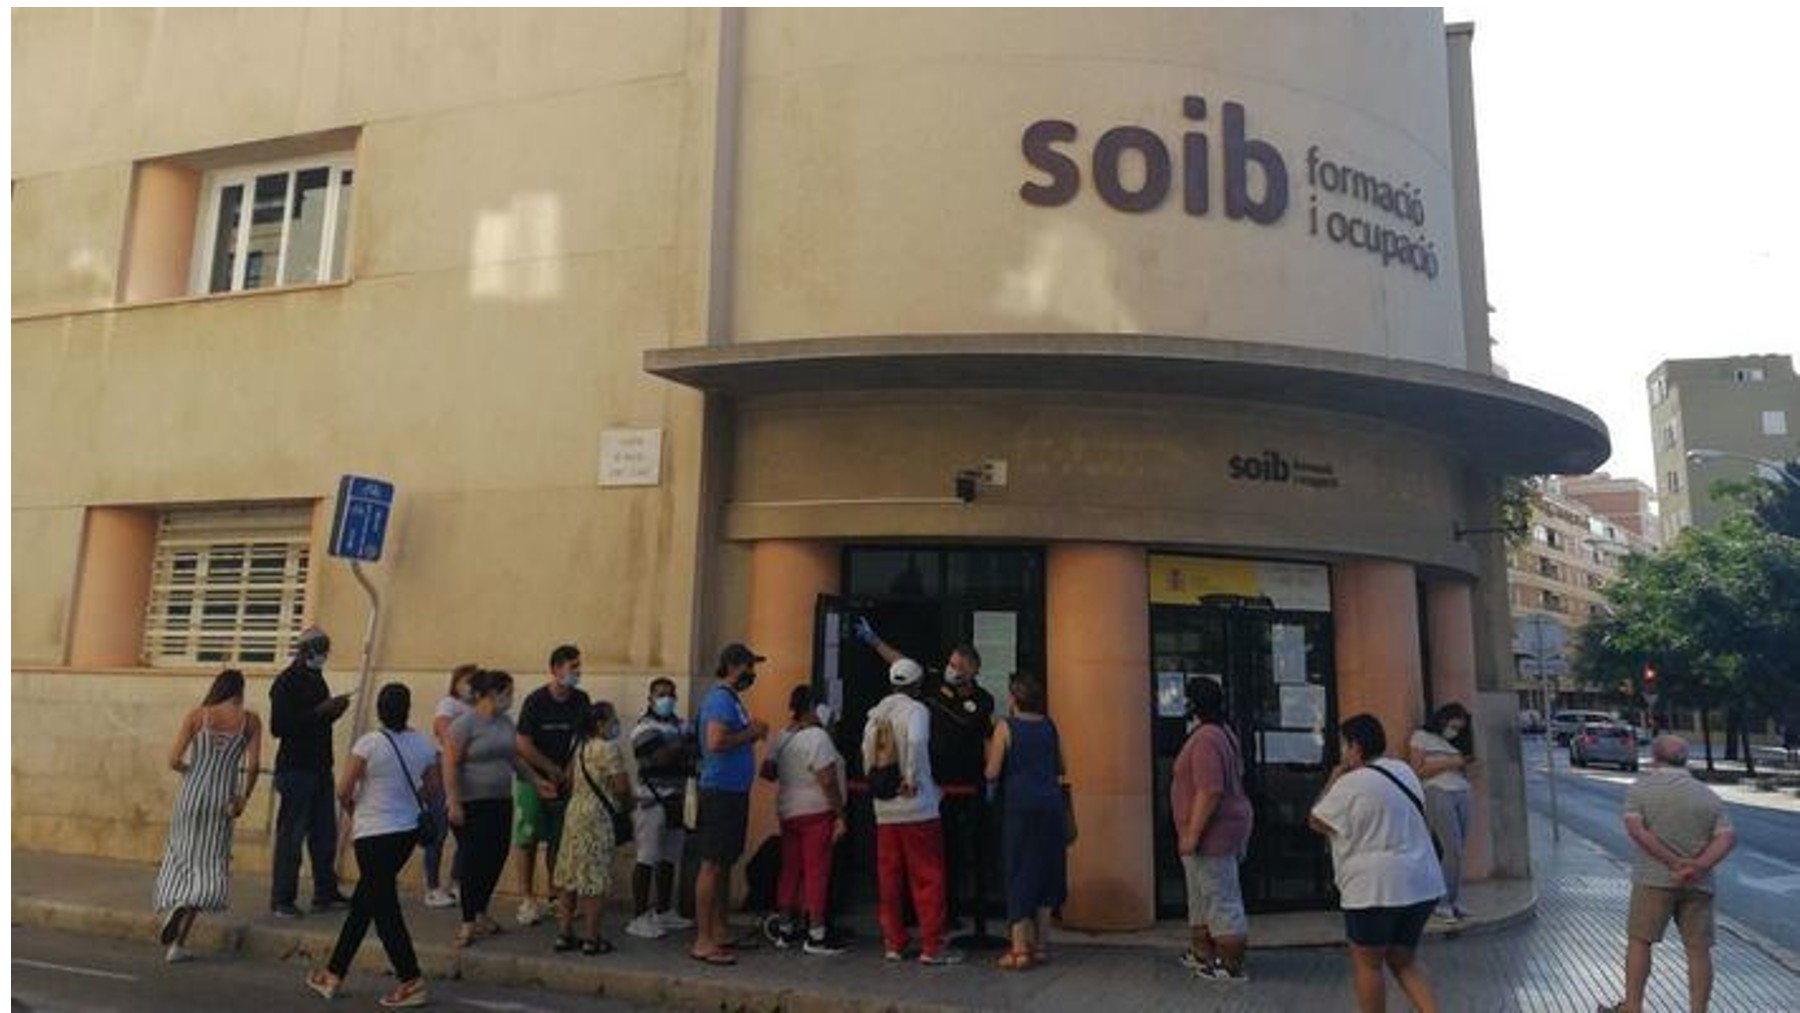 Oficina del SOIB en Palma de Mallorca.